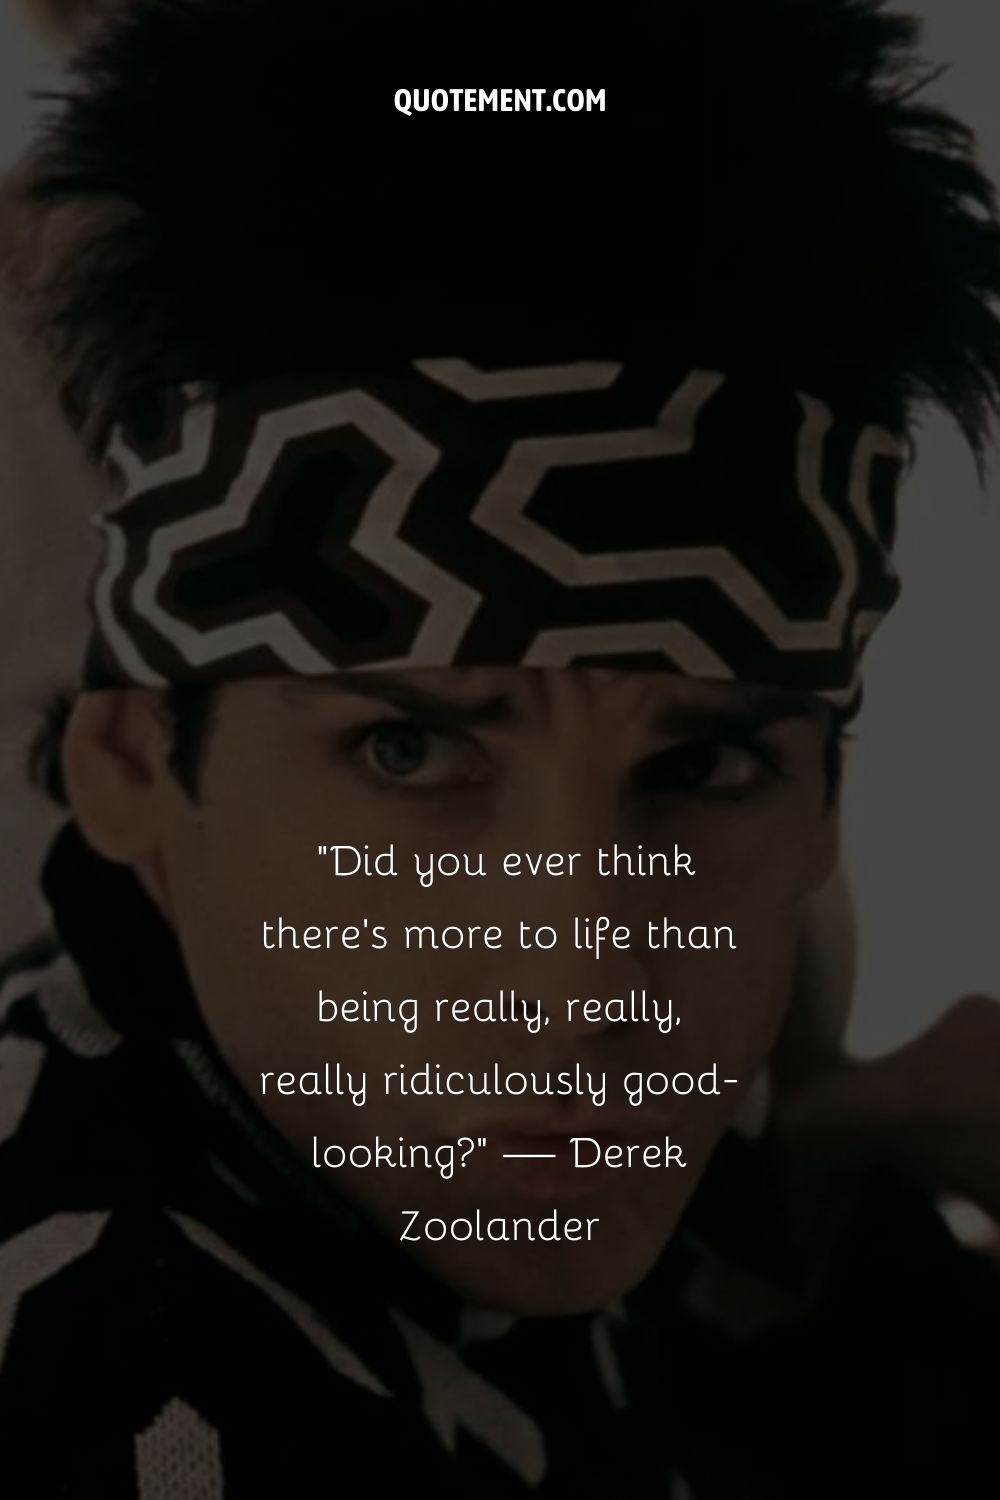 Image of Derek Zoolander representing the best Zoolander quote.